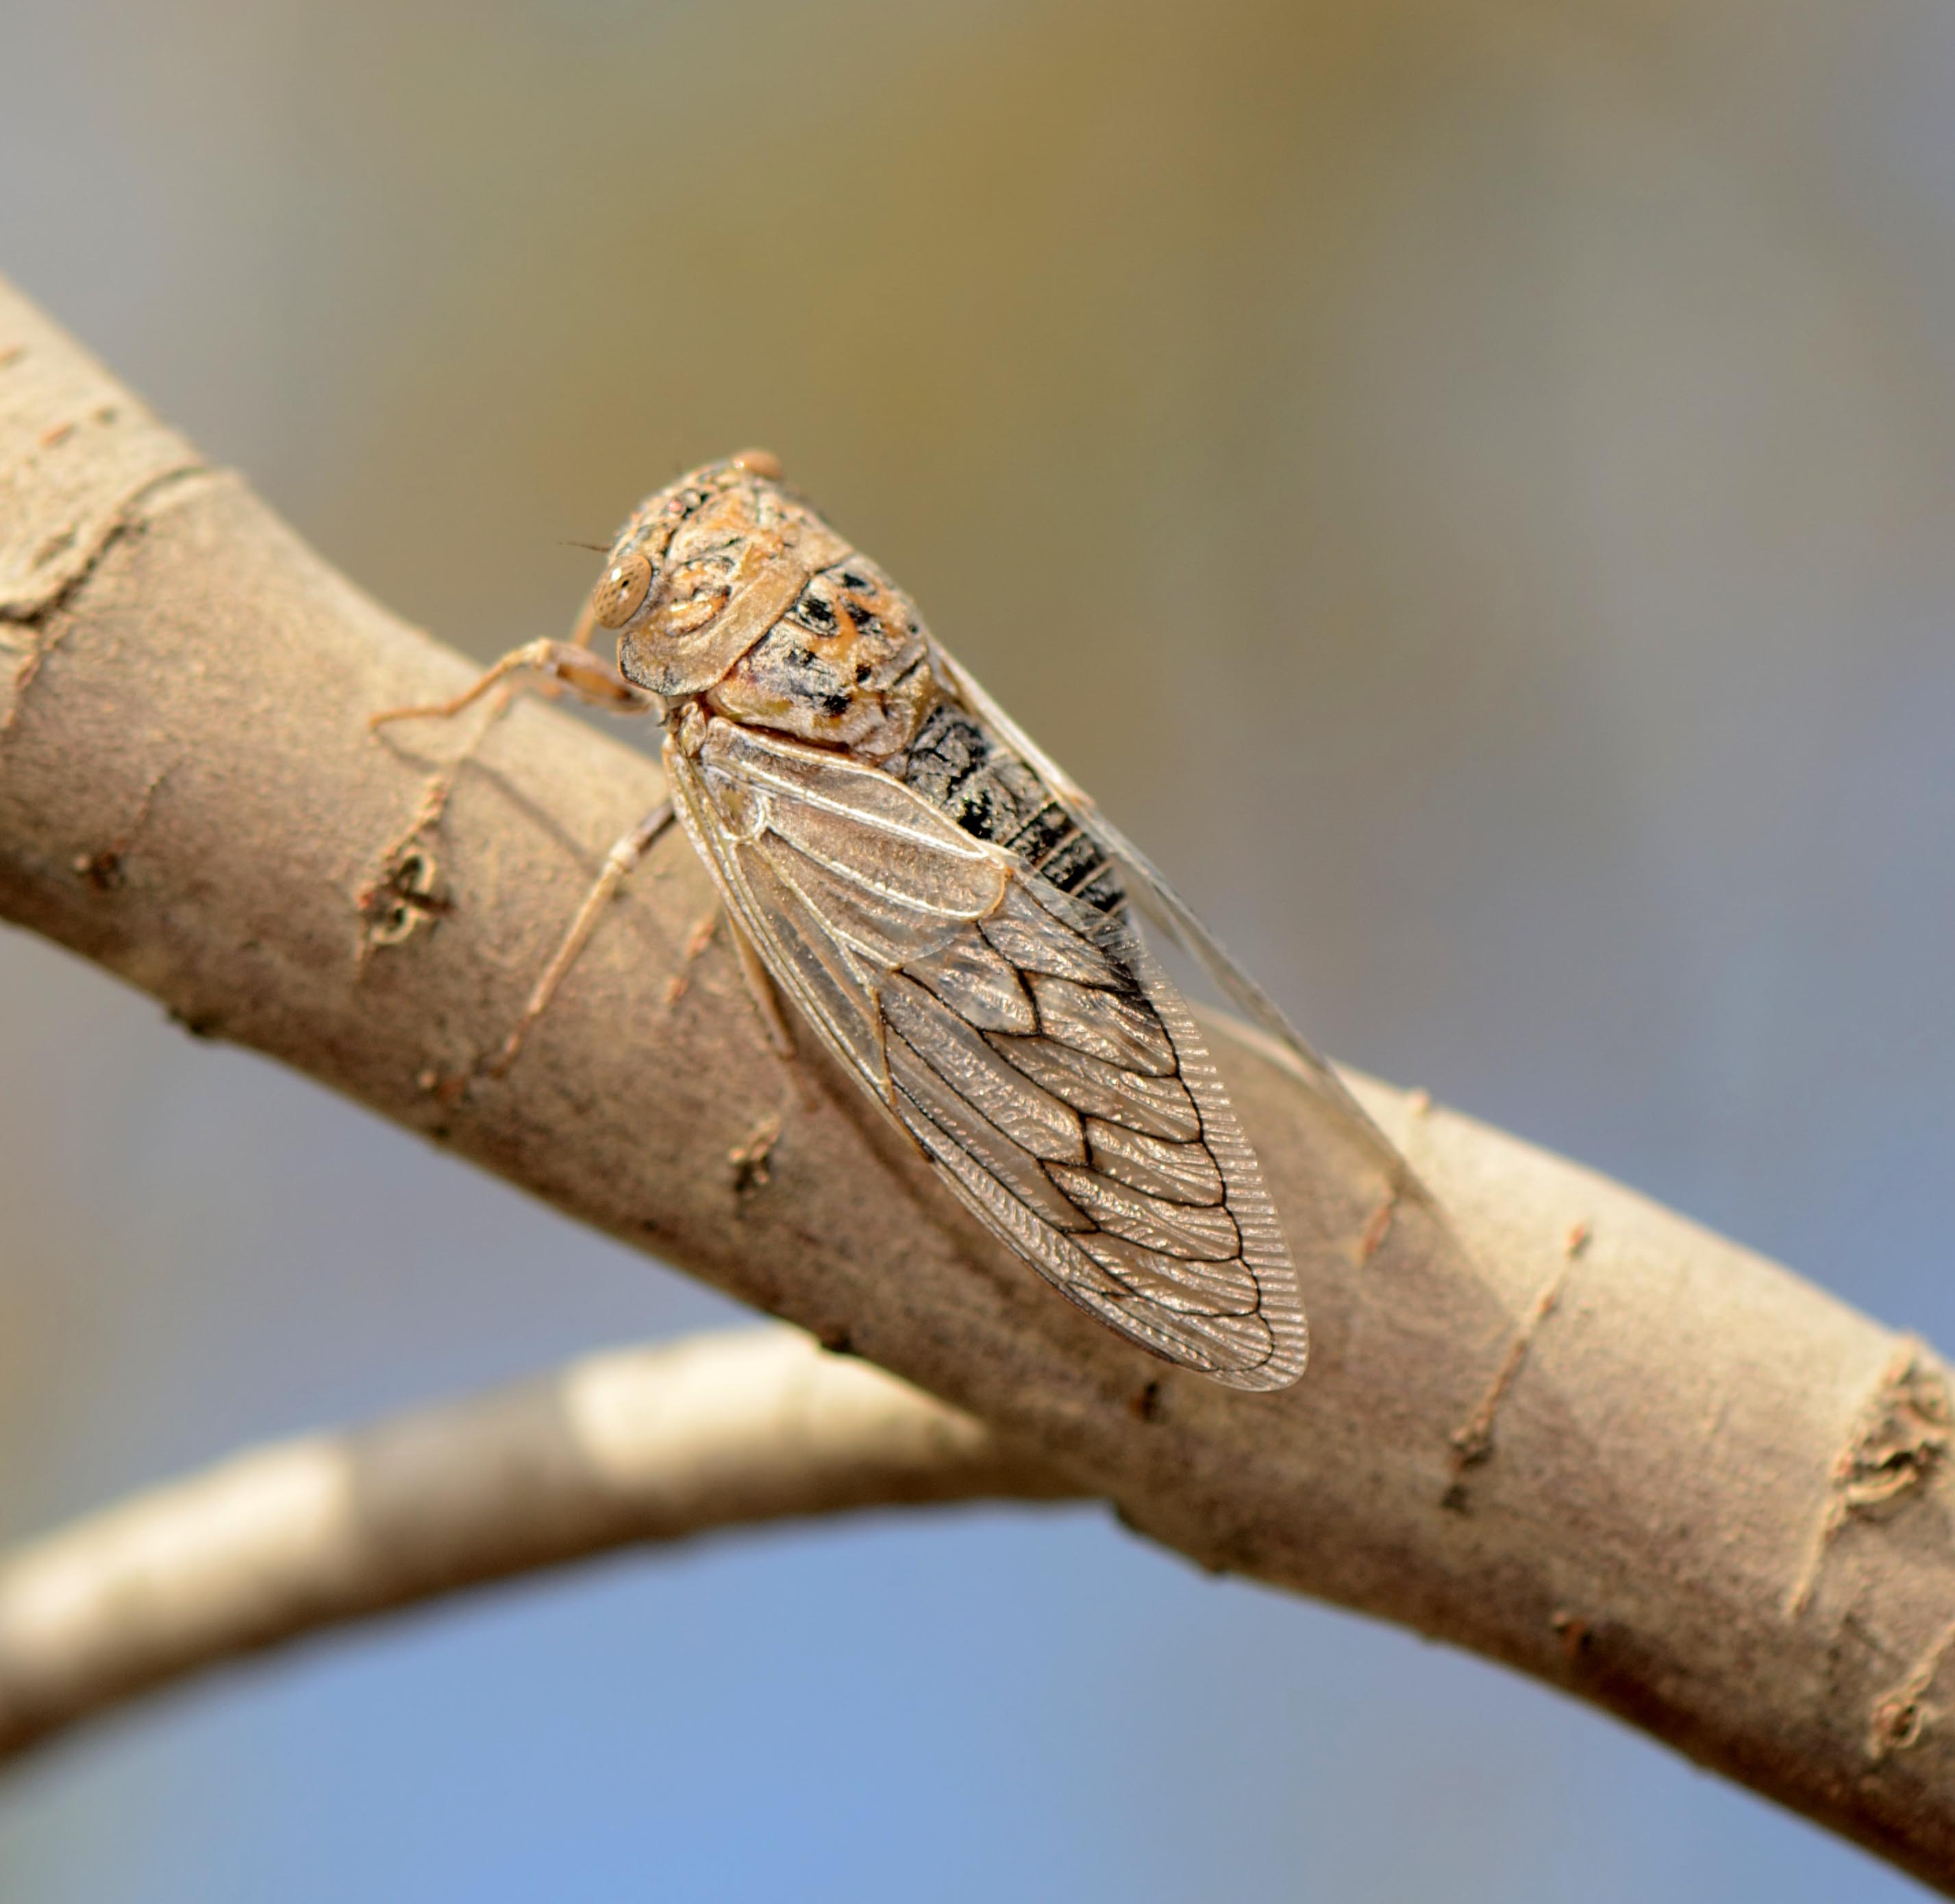 1. Platypleura arabica (Myers, 1928)- Arabian Cicada